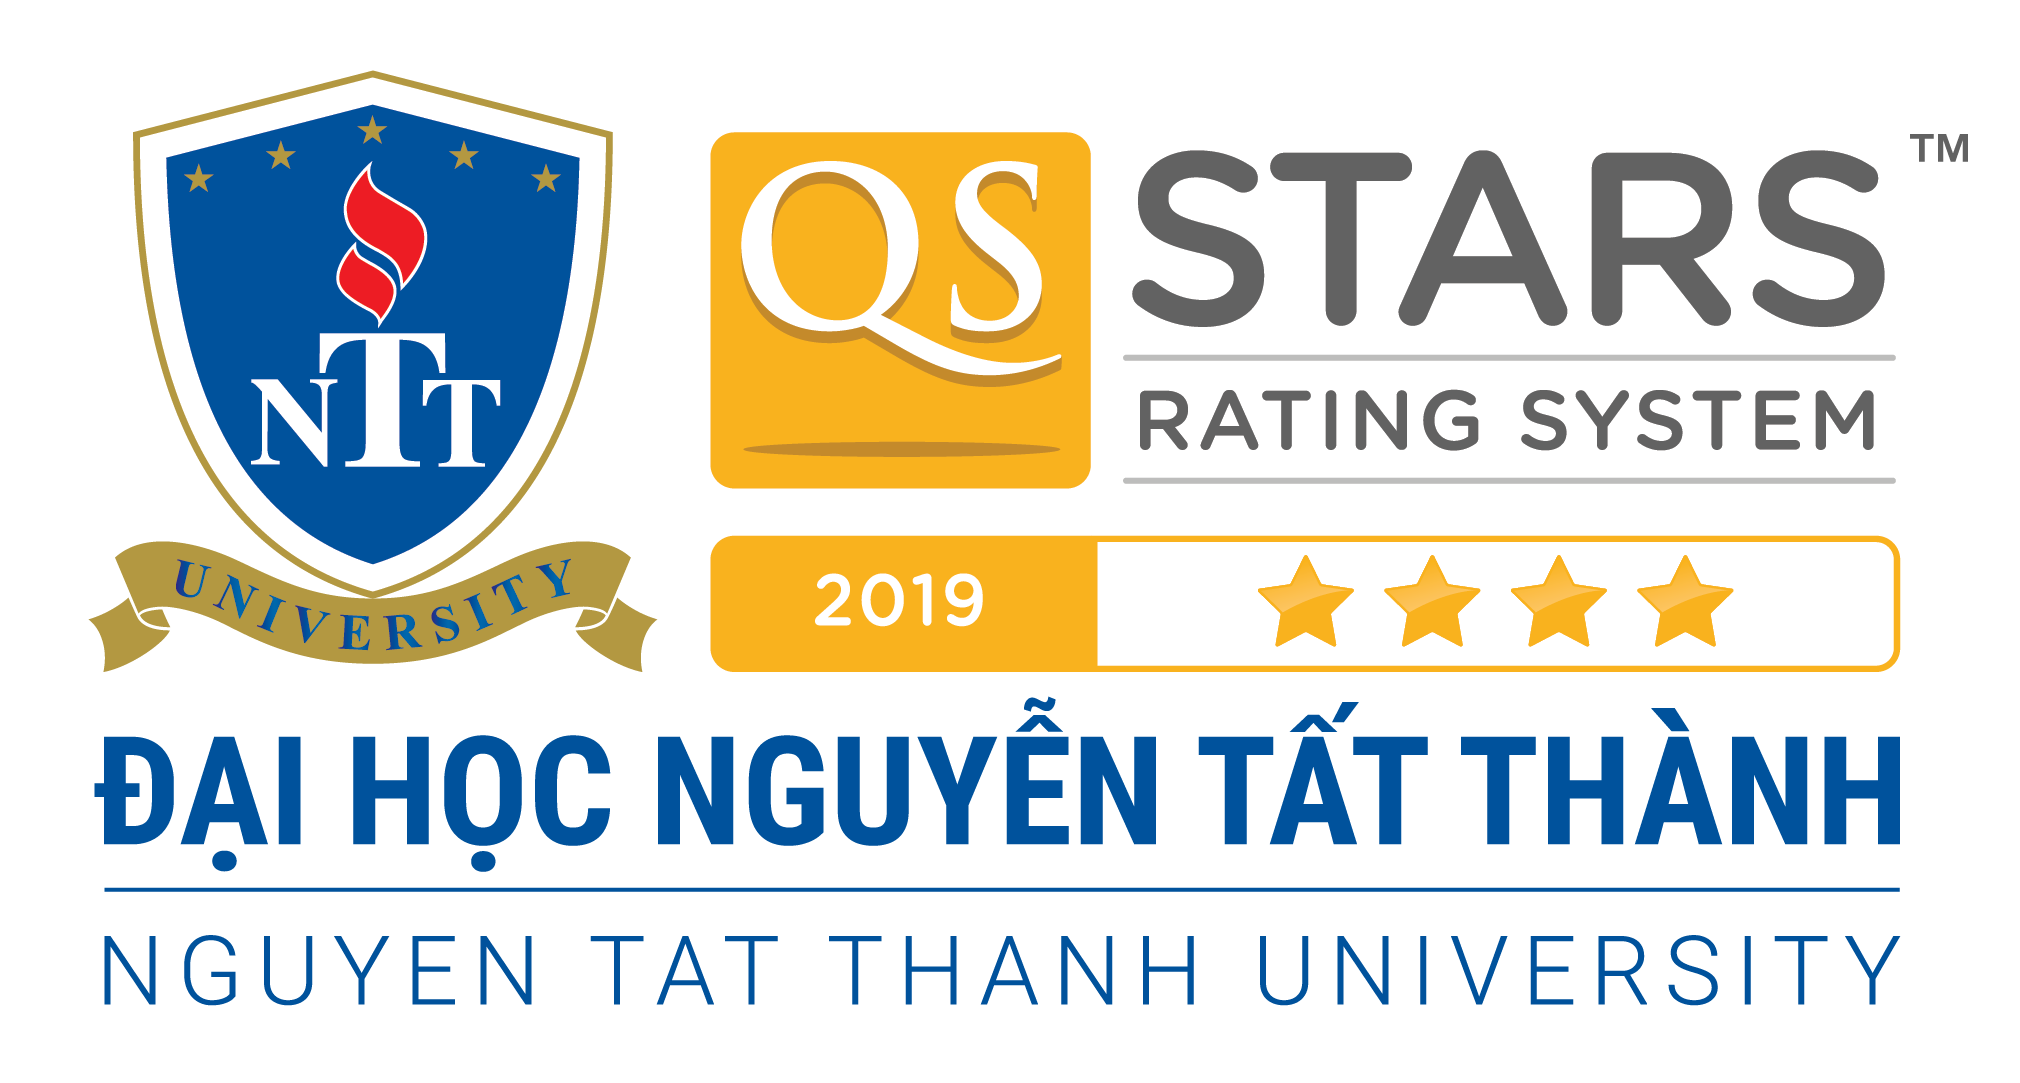 QS Stars – UK rated Nguyen Tat Thanh University as a 4 Star ...